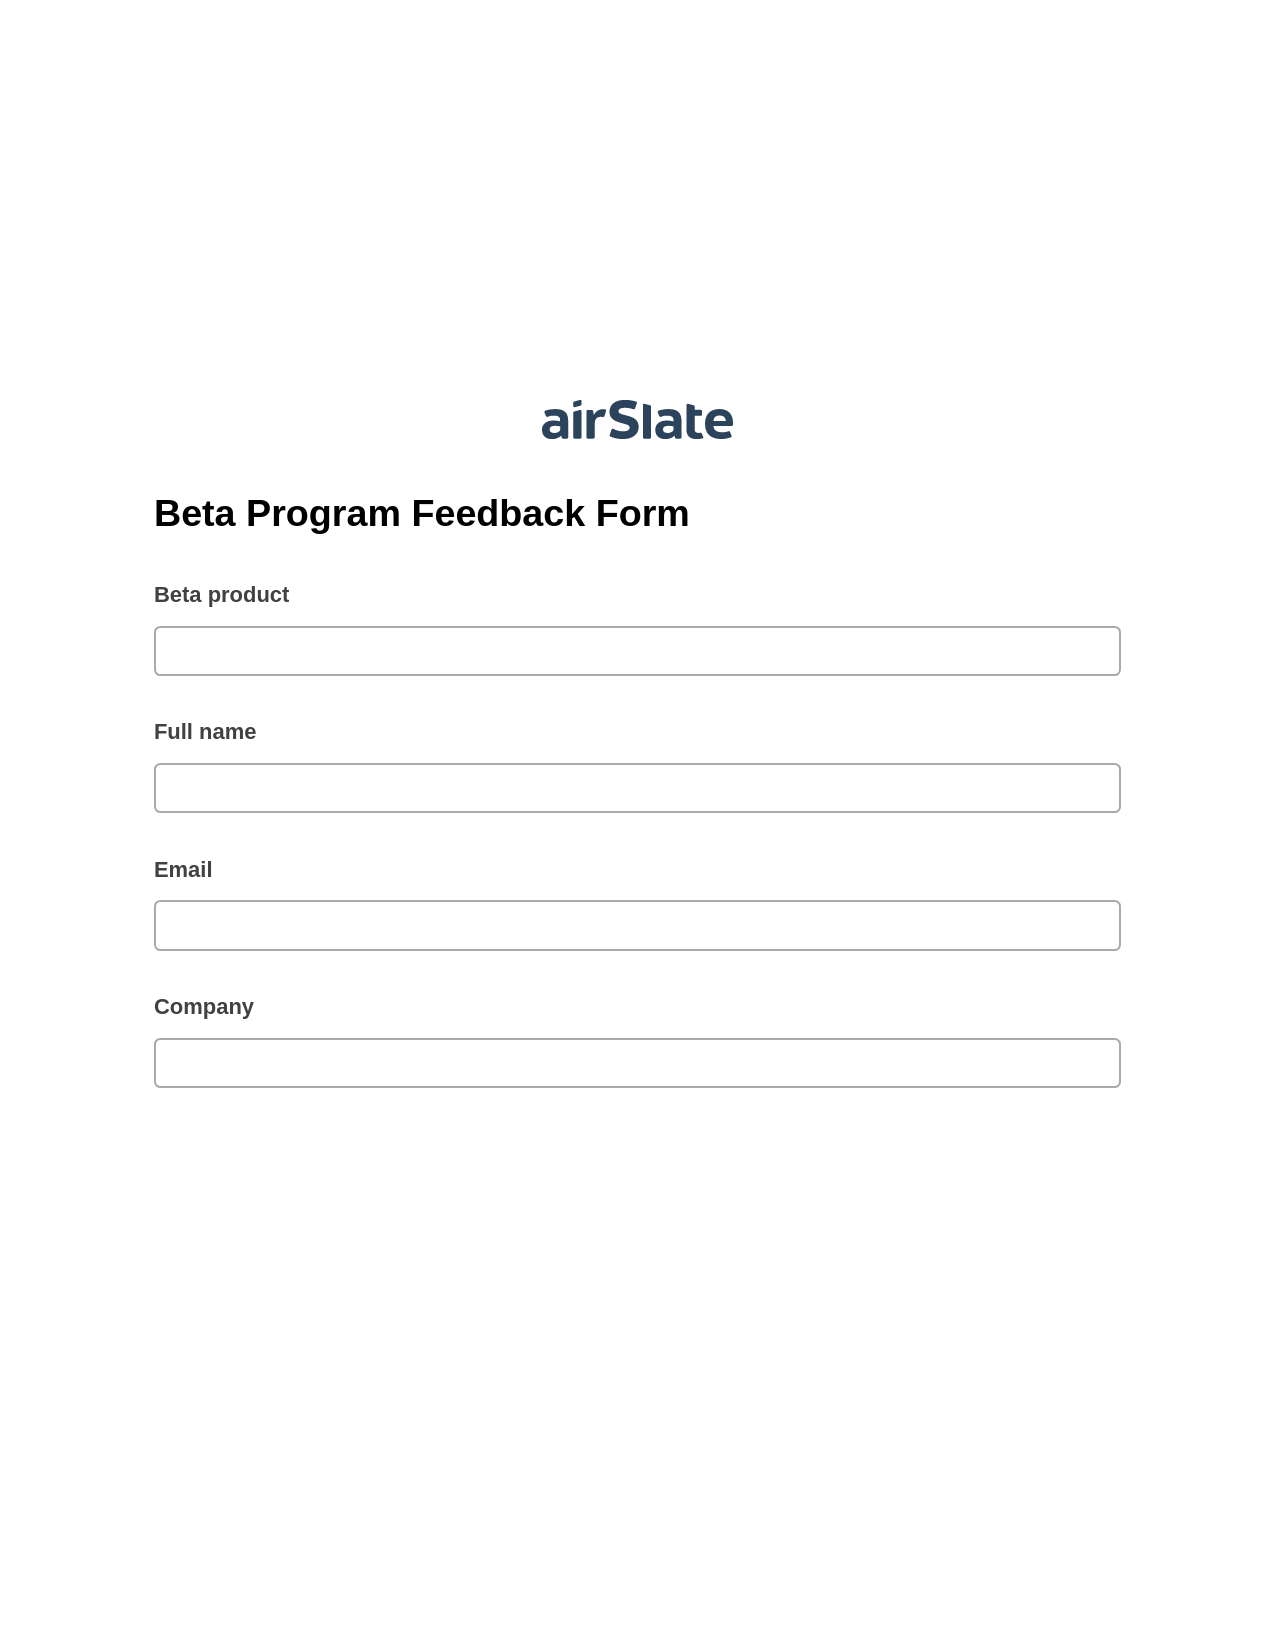 Beta Program Feedback Form Pre-fill from Salesforce Record Bot, Slack Notification Bot, Archive to SharePoint Folder Bot